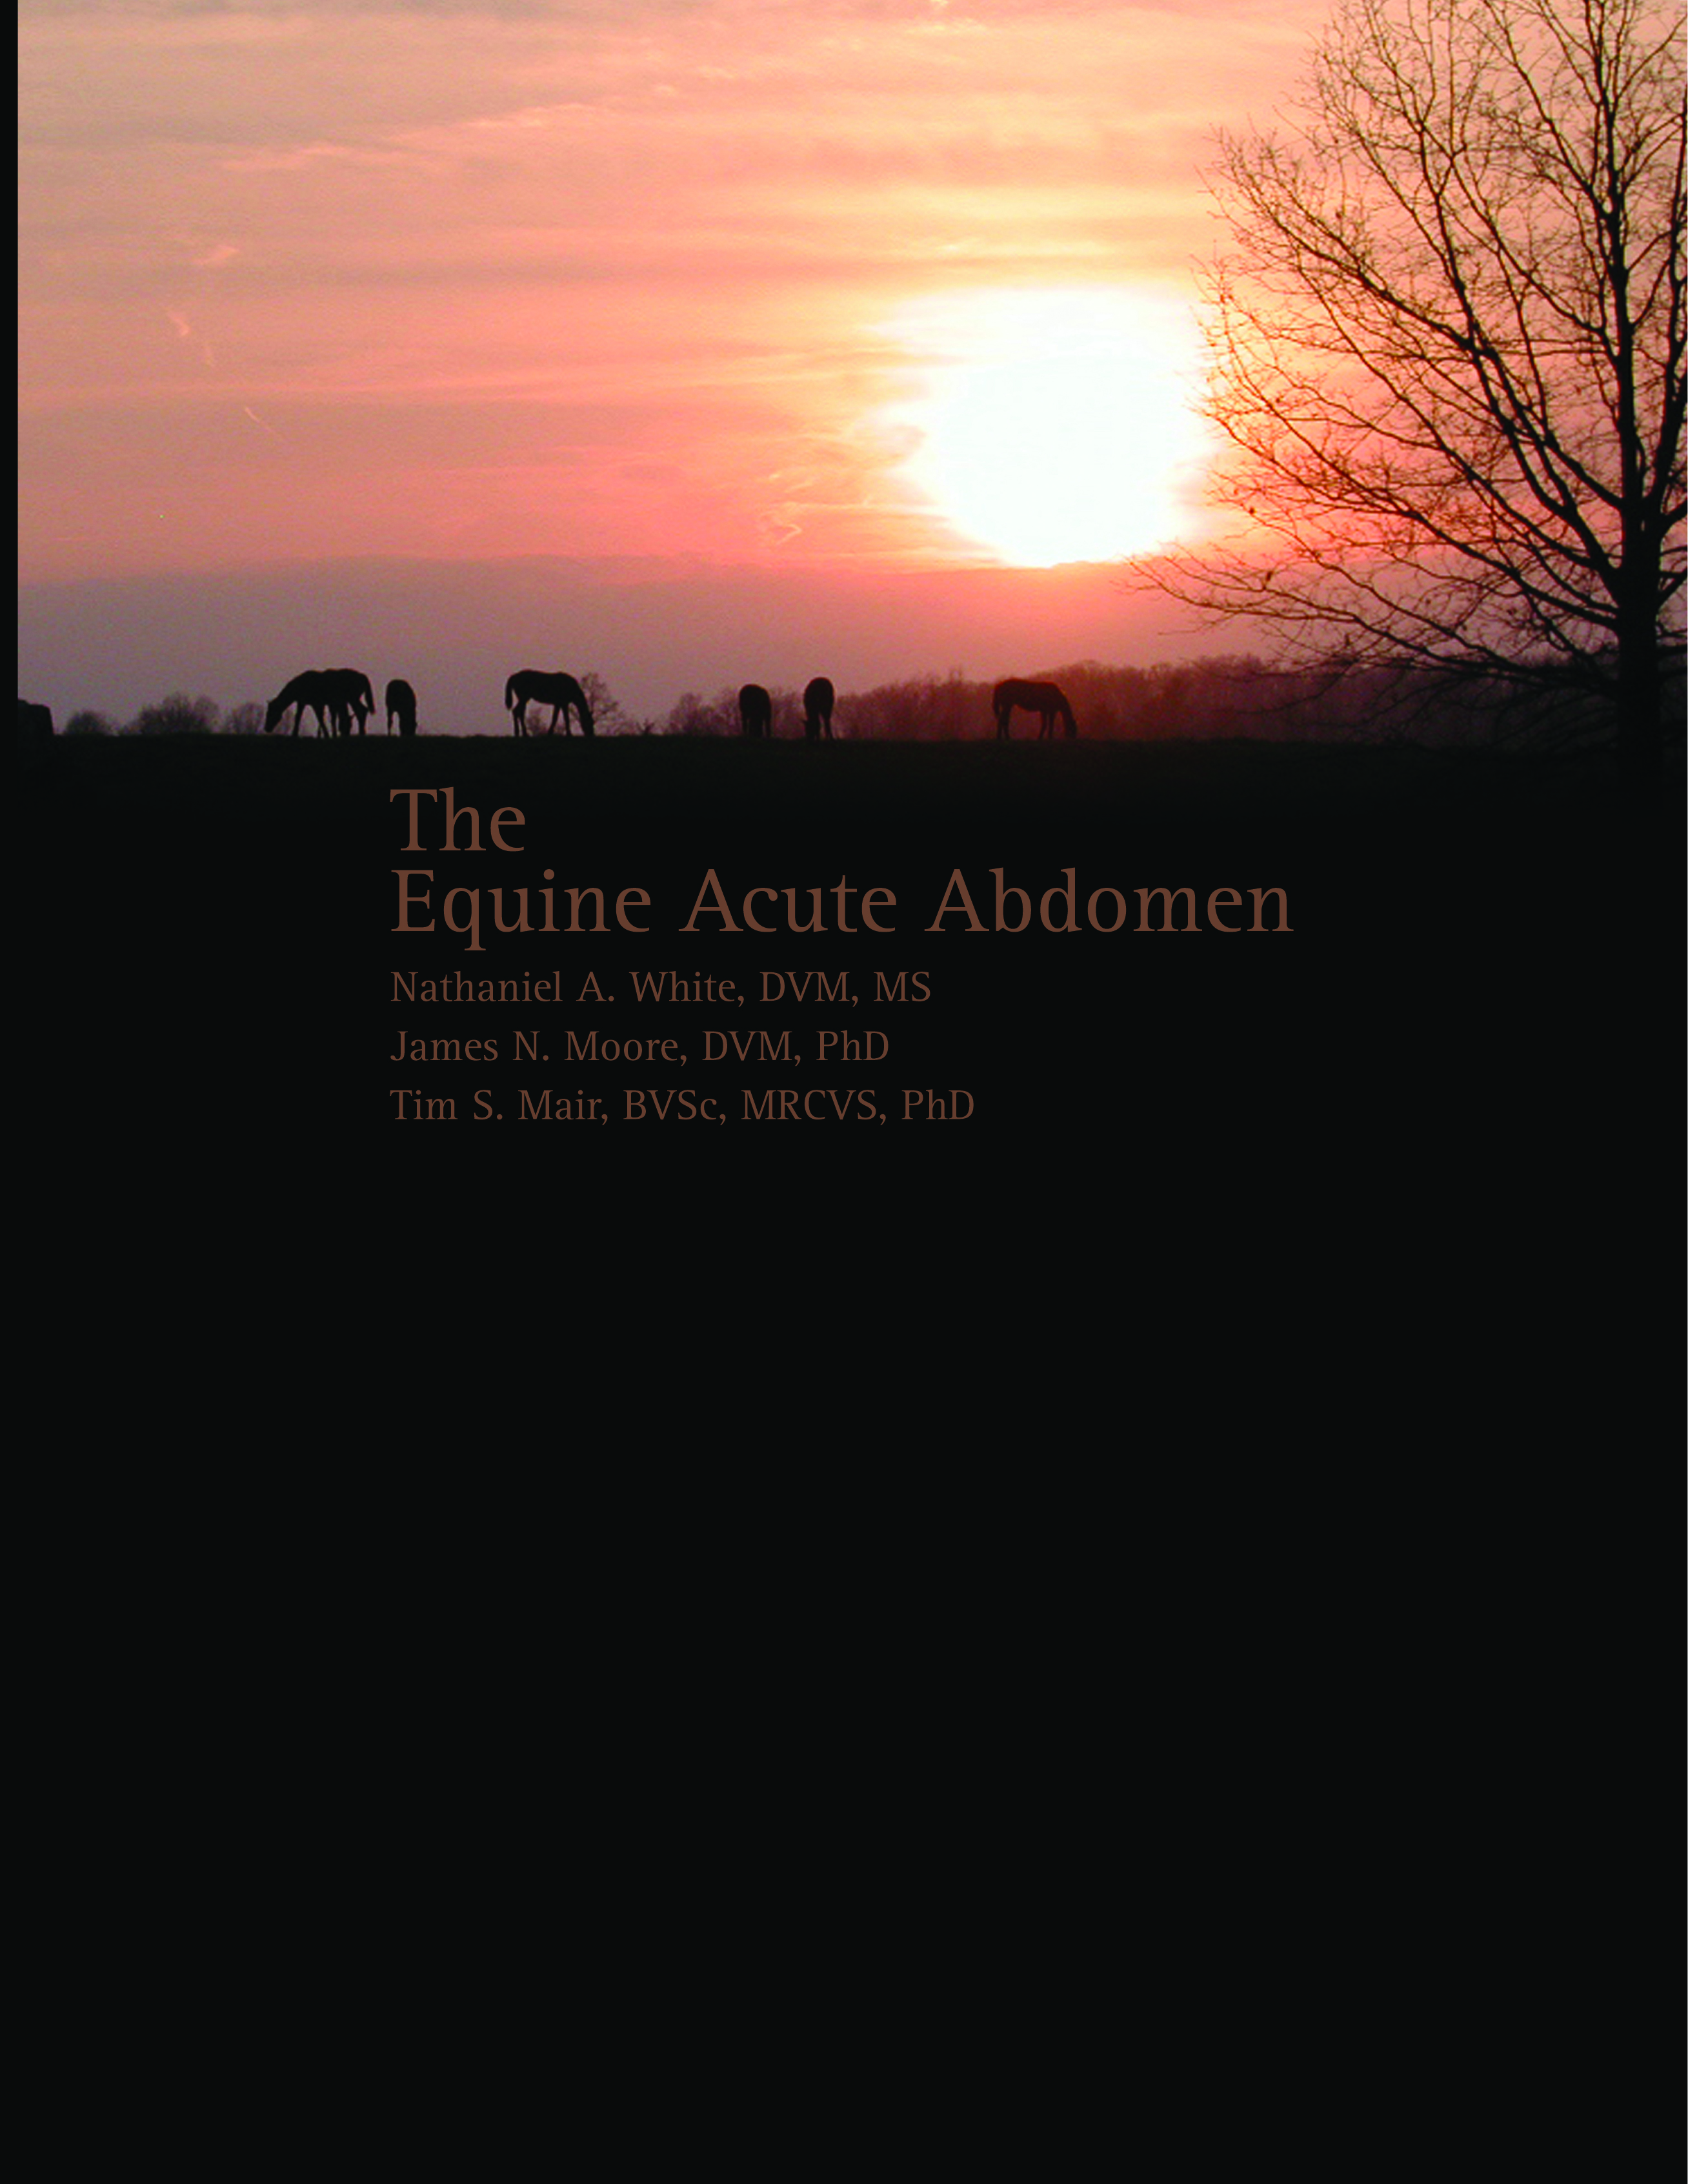 The Equine Acute Abdomen book cover